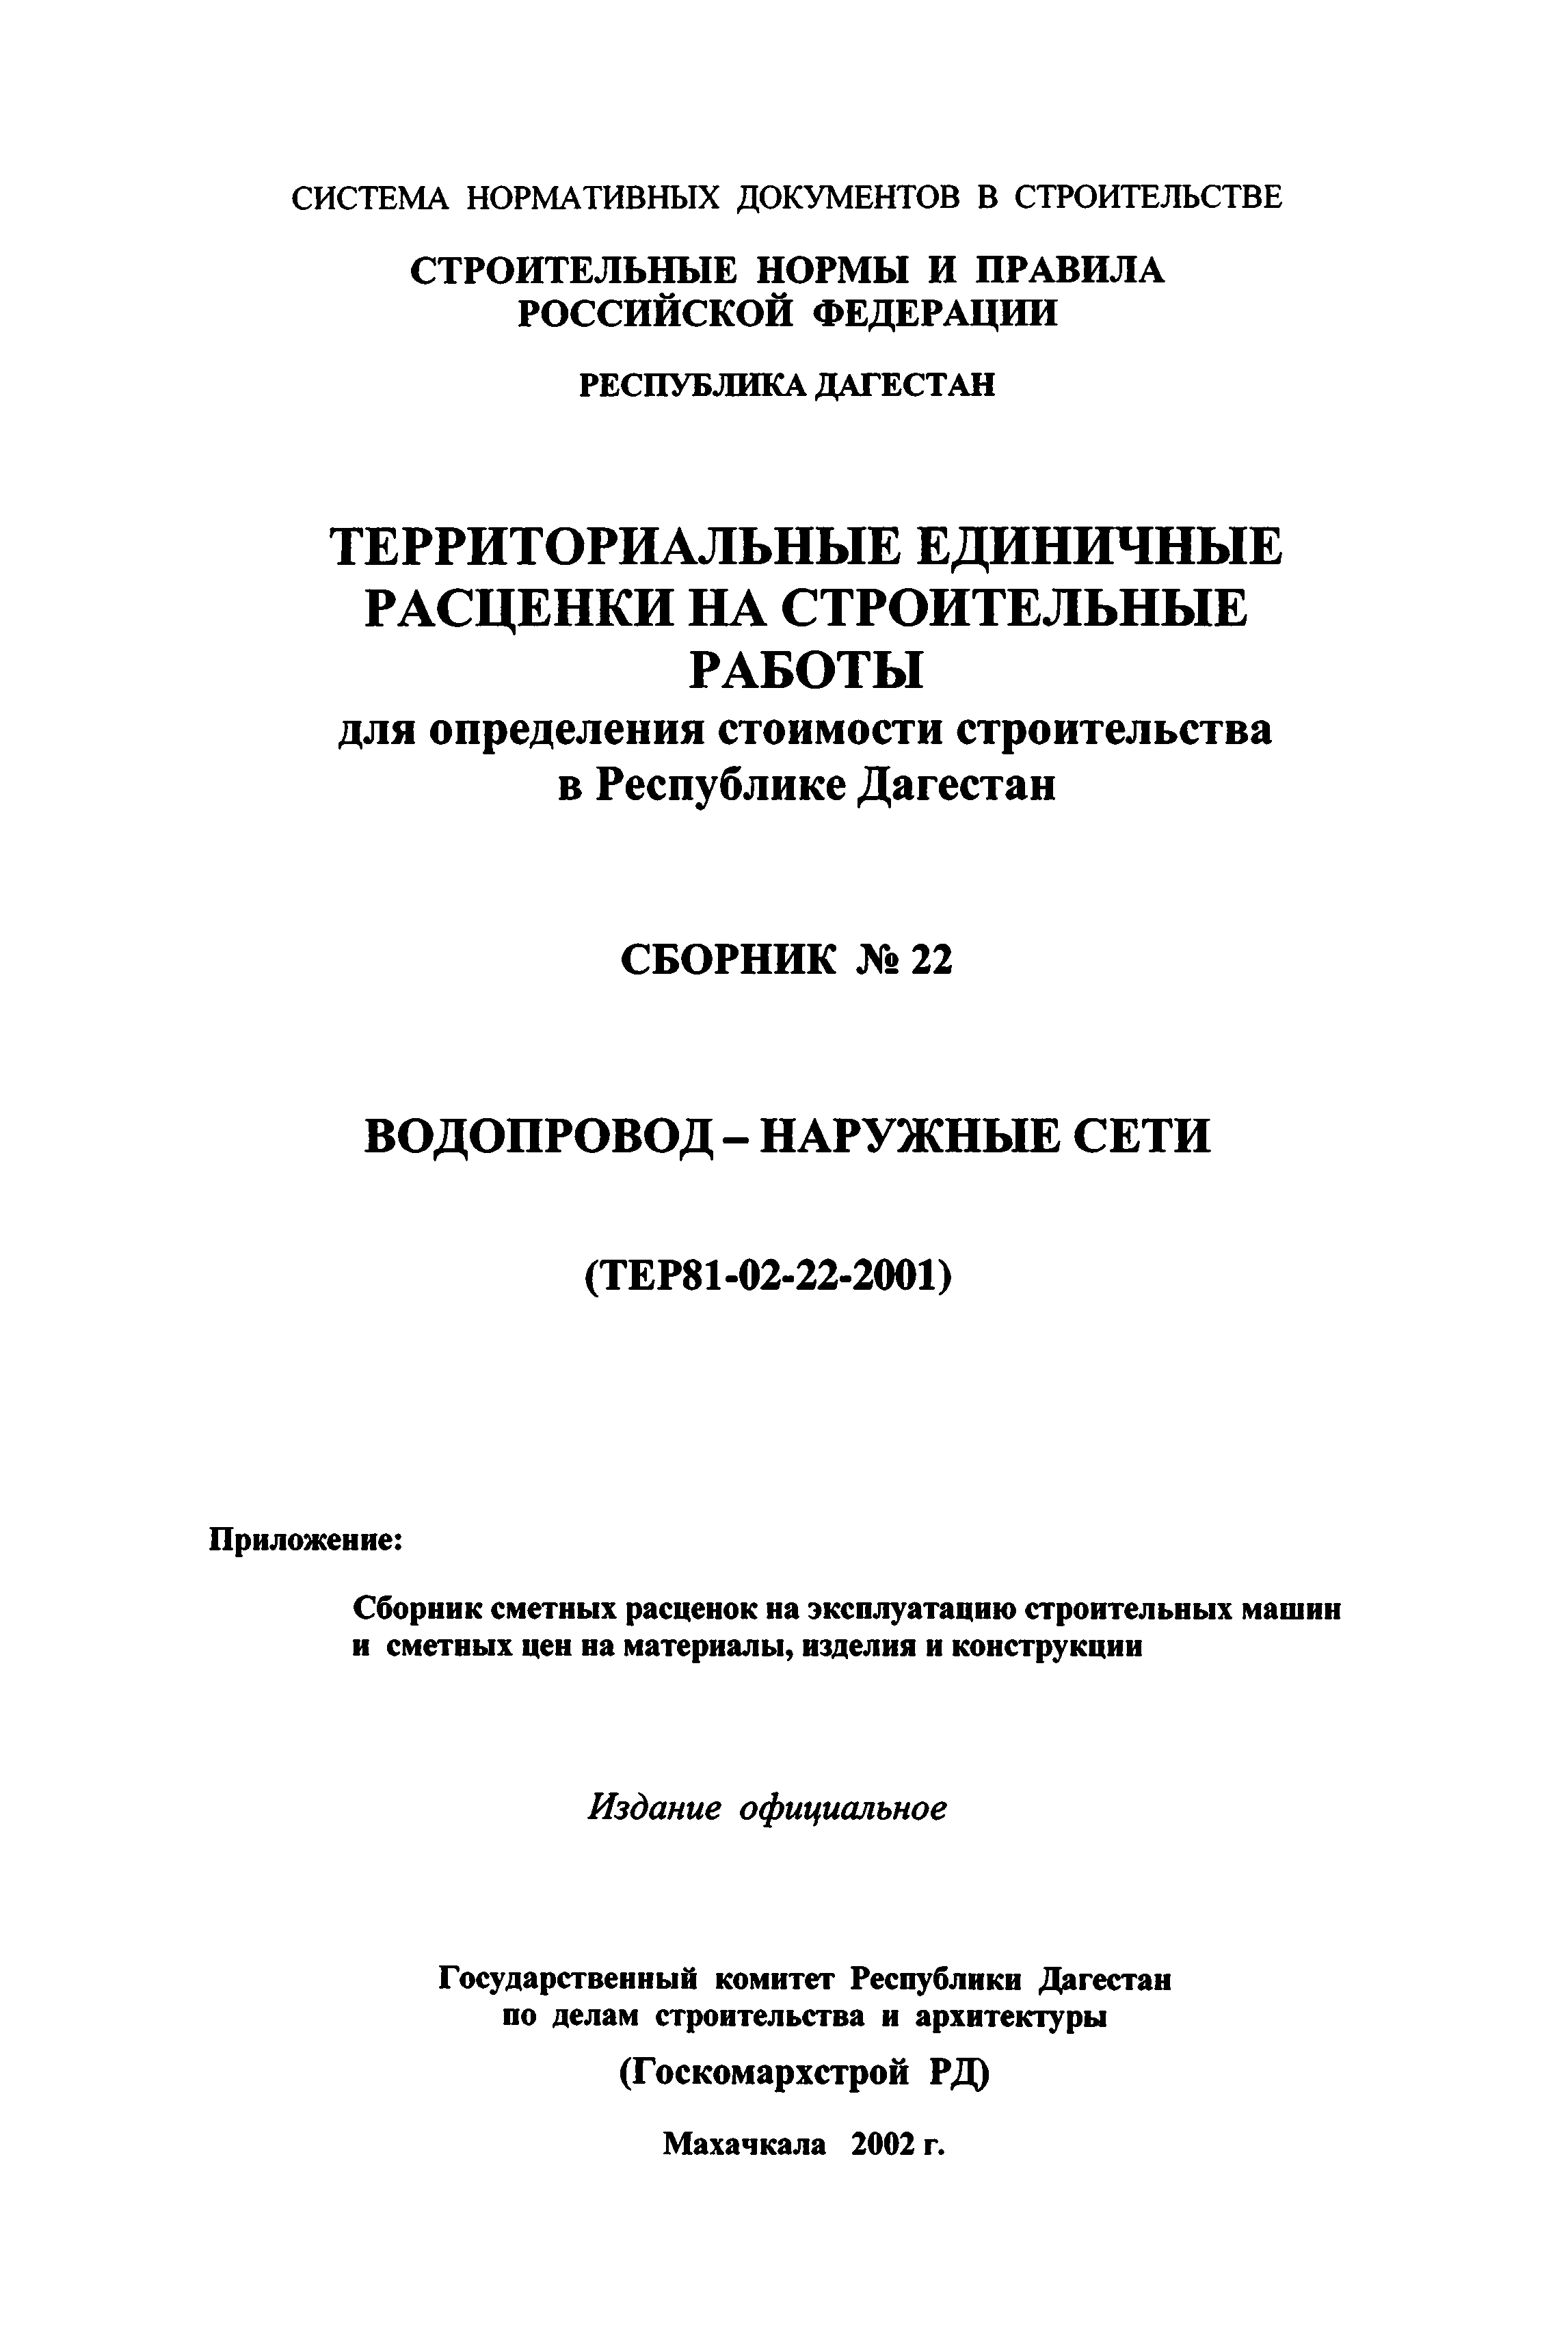 ТЕР Республика Дагестан 2001-22